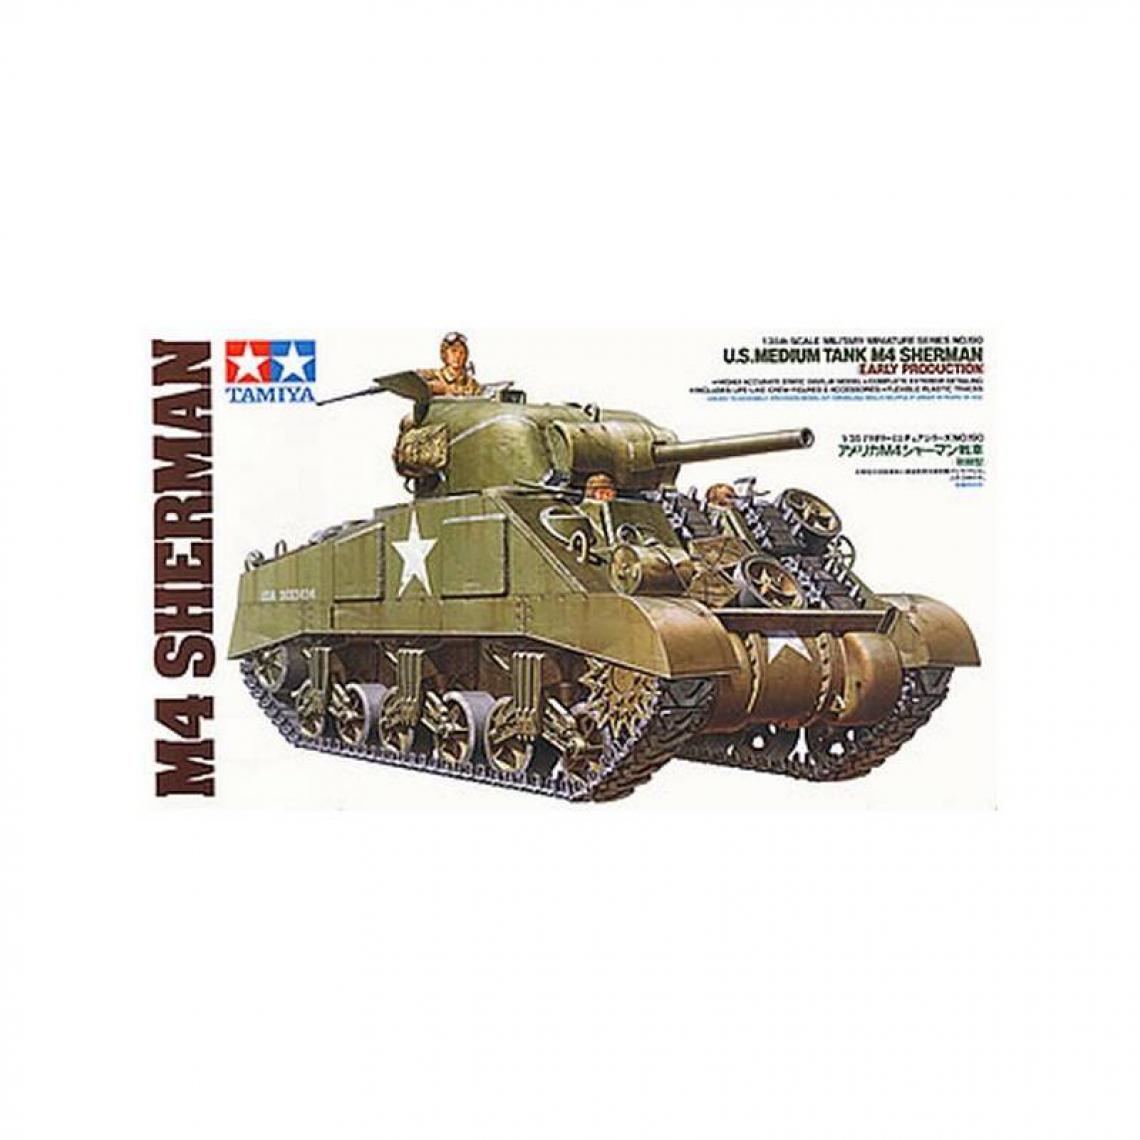 Tamiya - Maquette Char U.s. Medium Tank M4 Sherman - Early Production - Chars